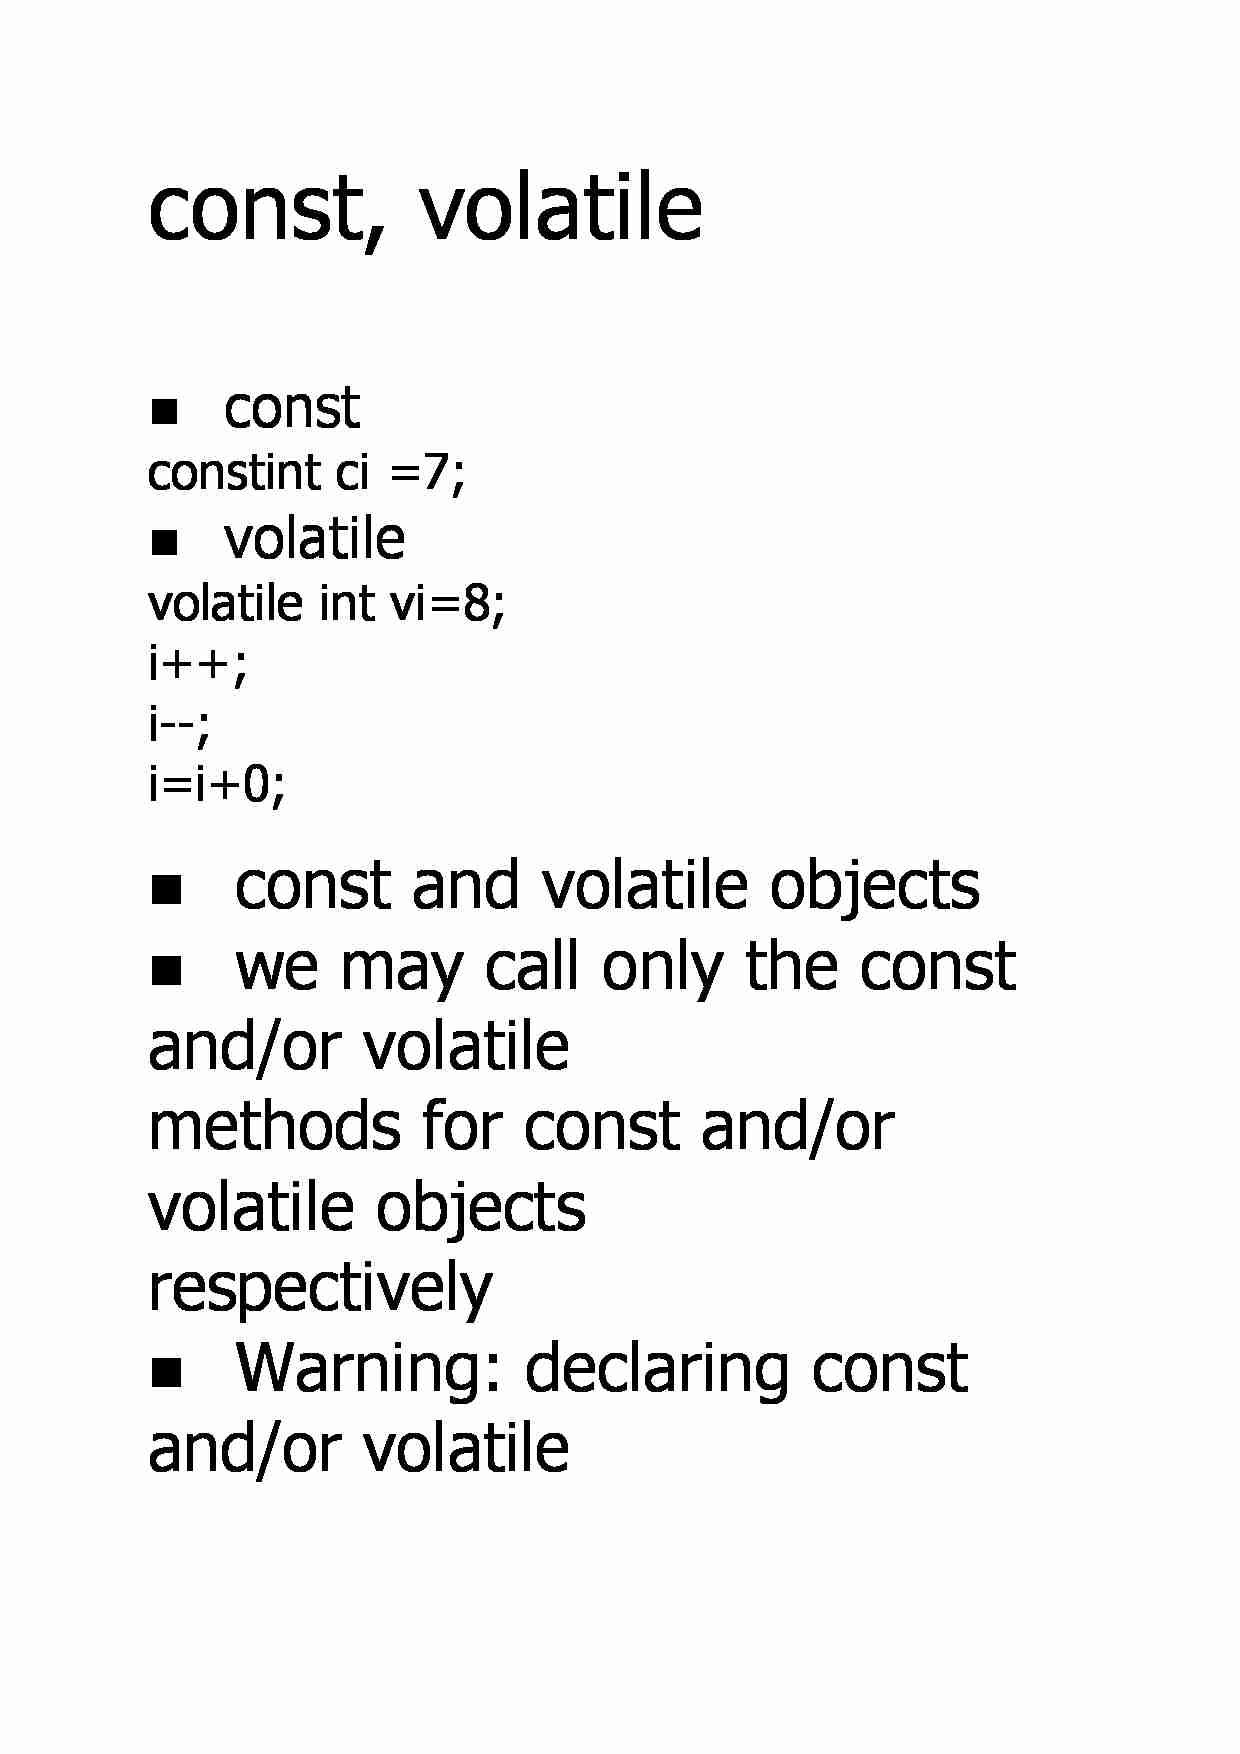 const and volatile - strona 1